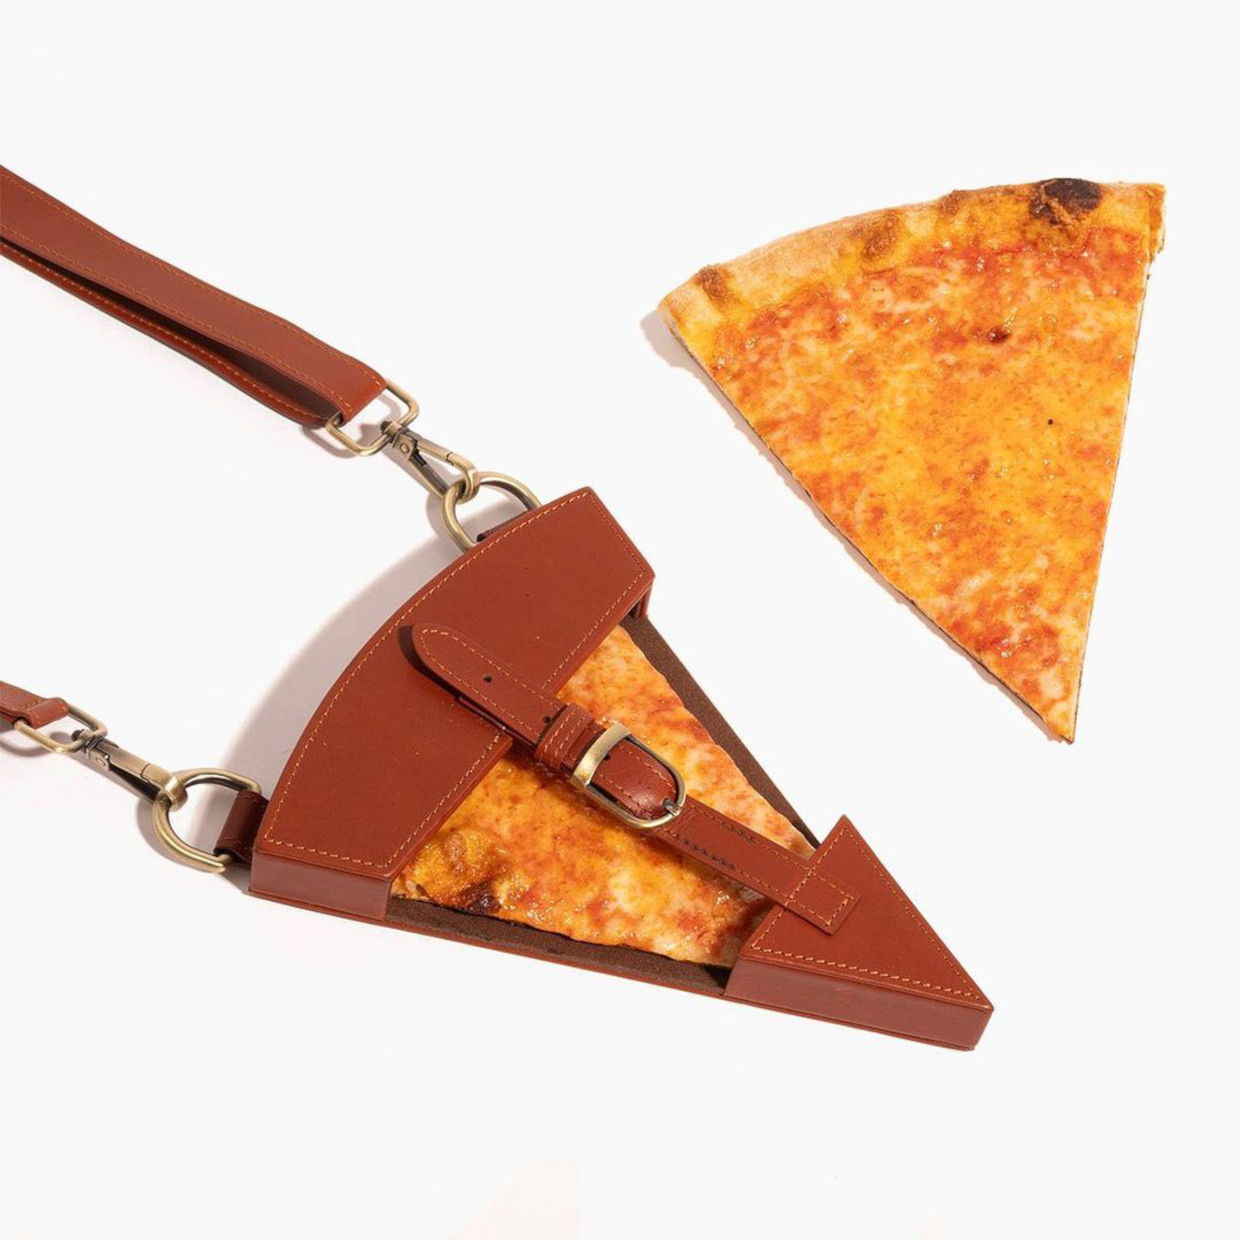 Designer Handbags Designed to Hold a Single Pizza Slice, Hot Dog